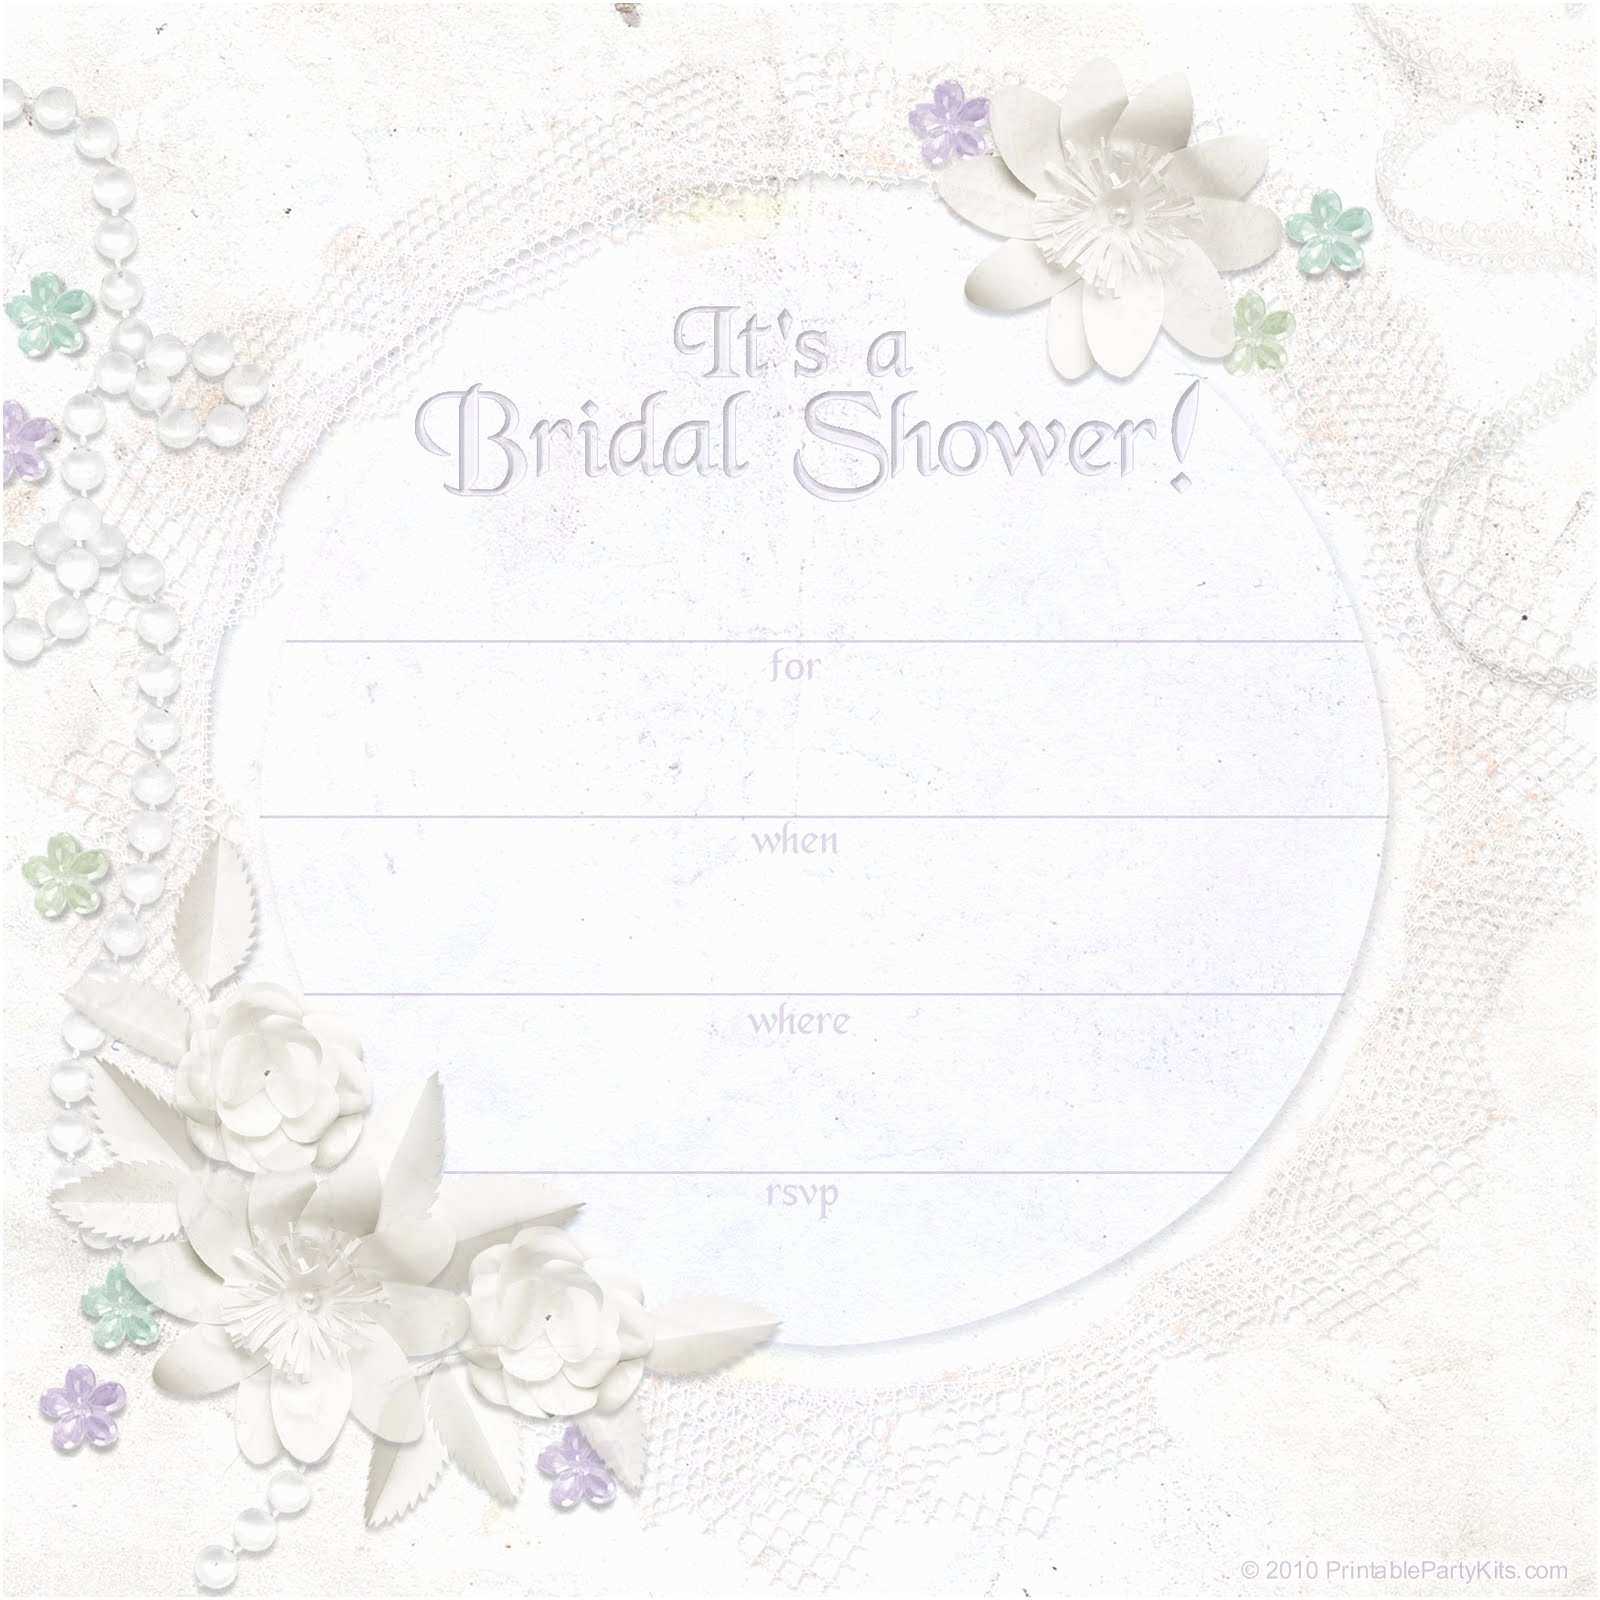 free-wedding-shower-invitation-templates-bridal-shower-within-blank